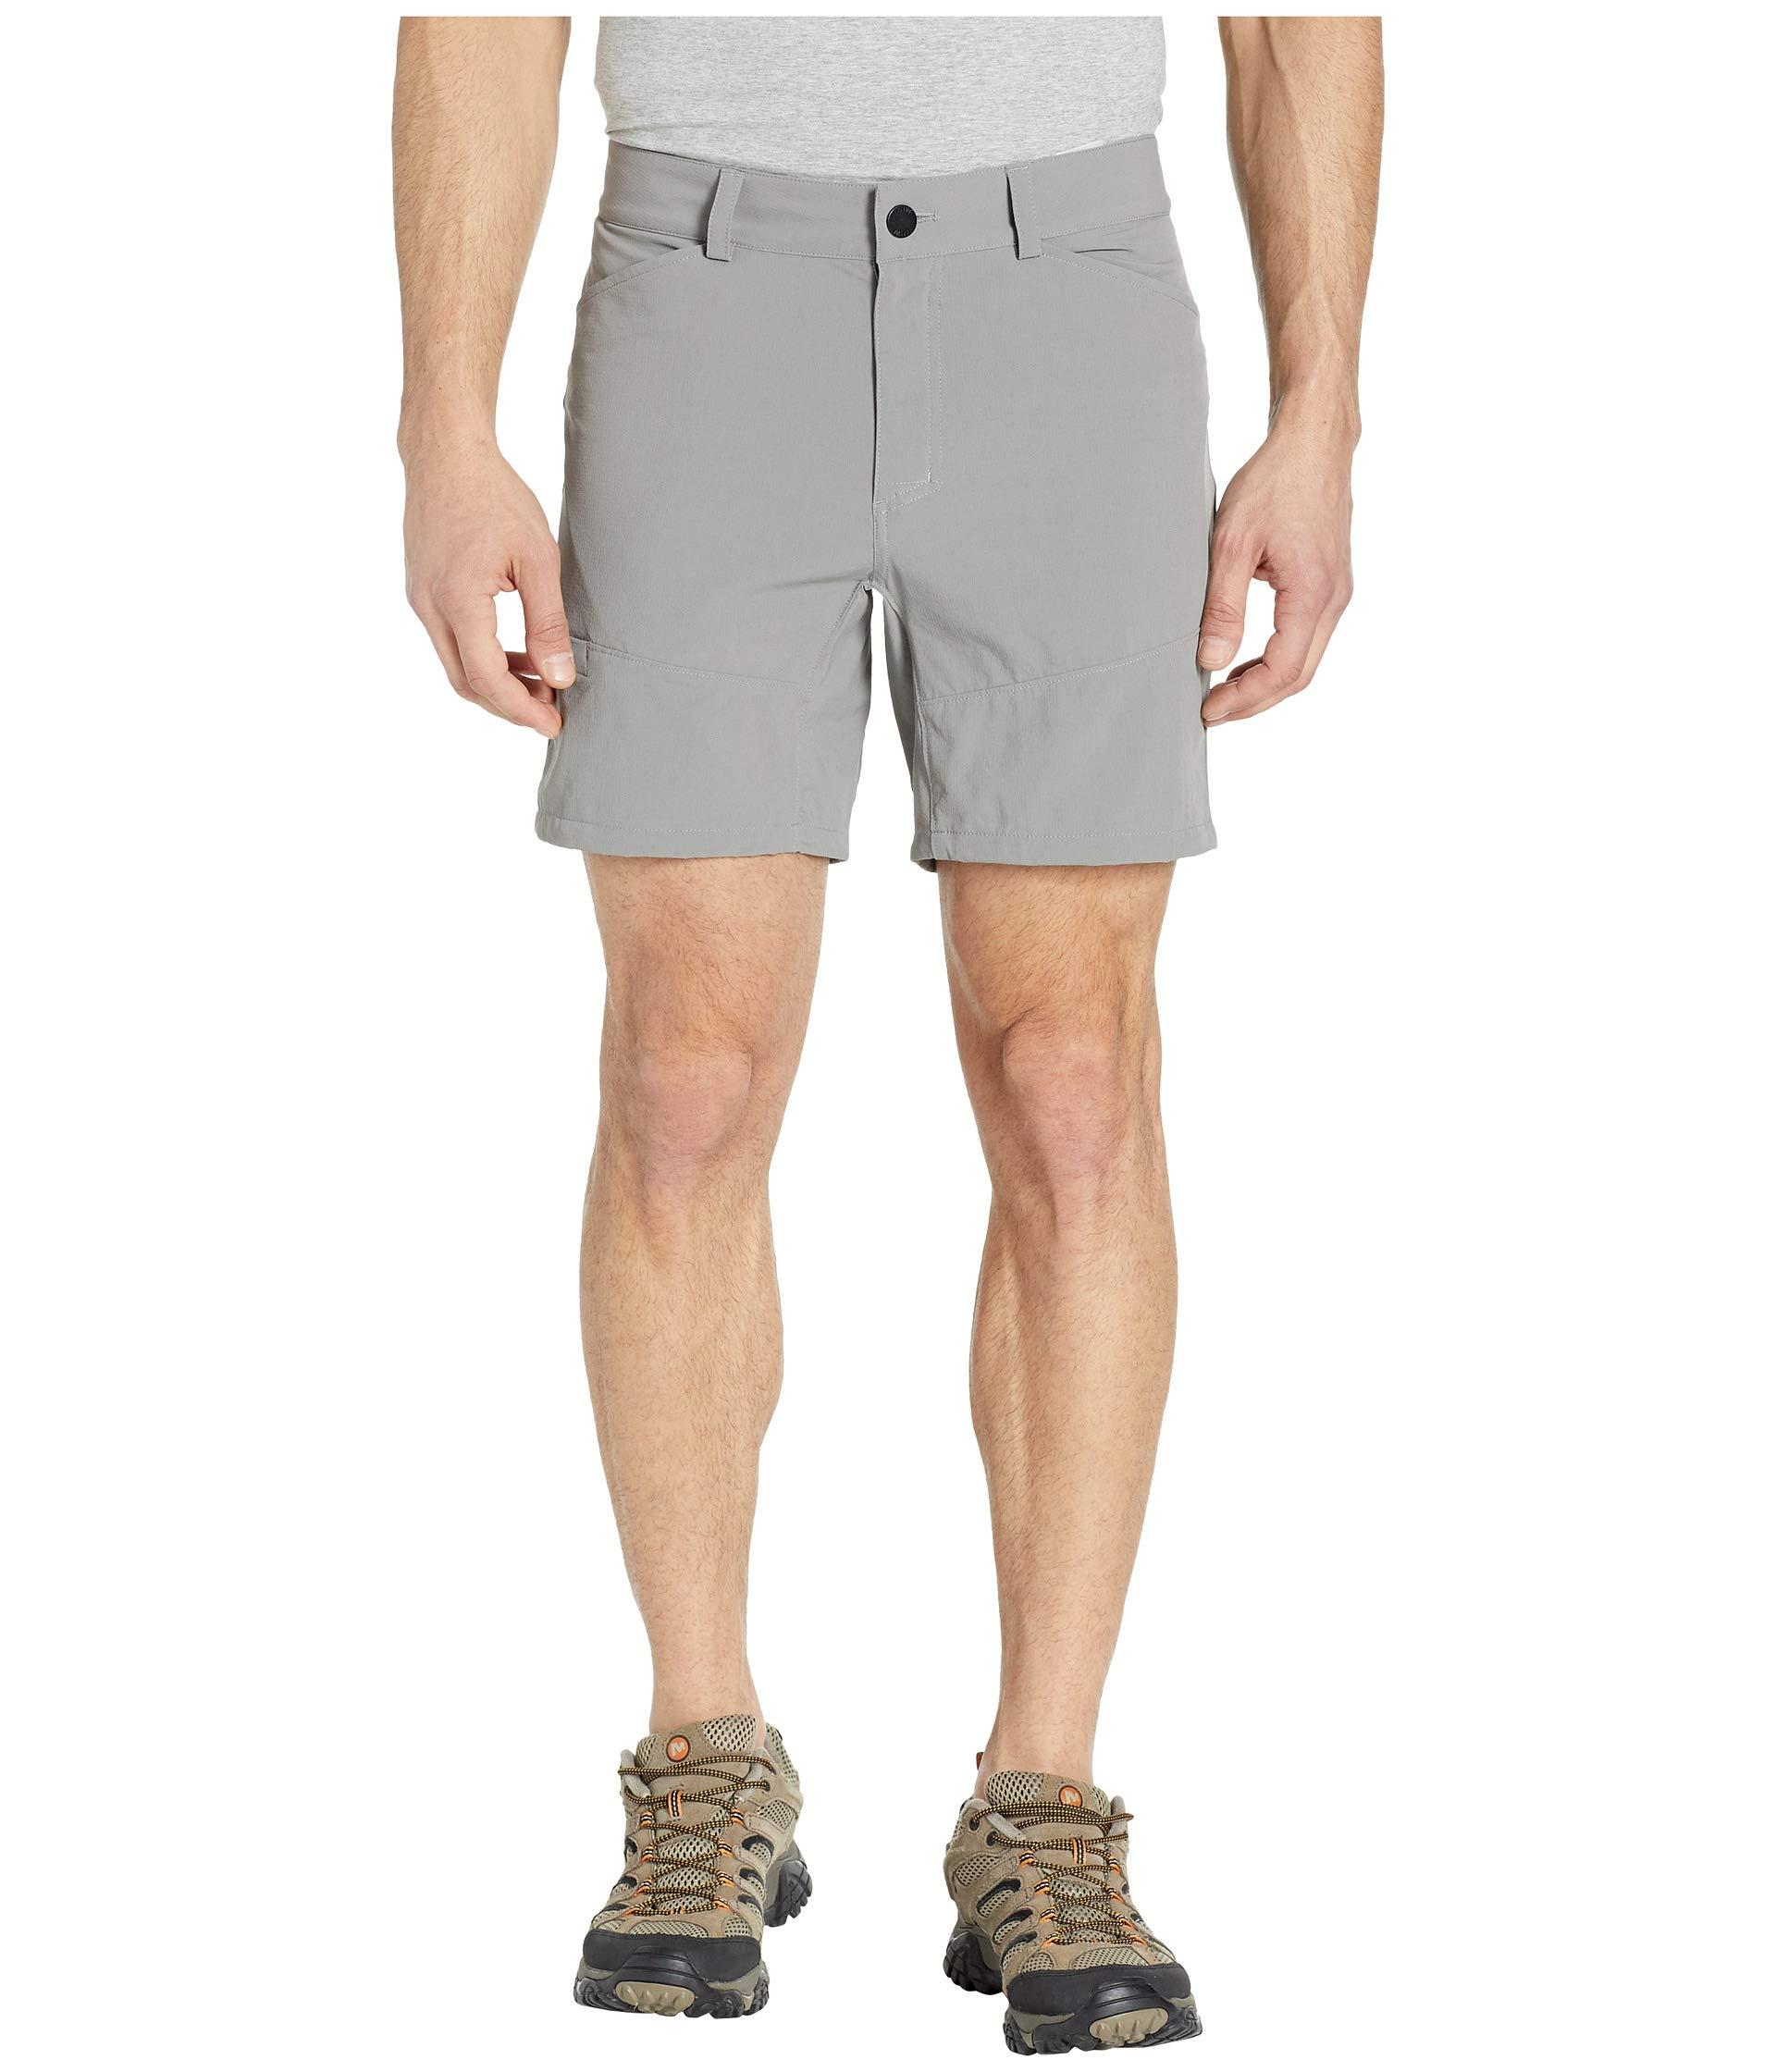 Mountain Hardwear Synthetic Logan Canyontm Shorts in Gray for Men - Lyst